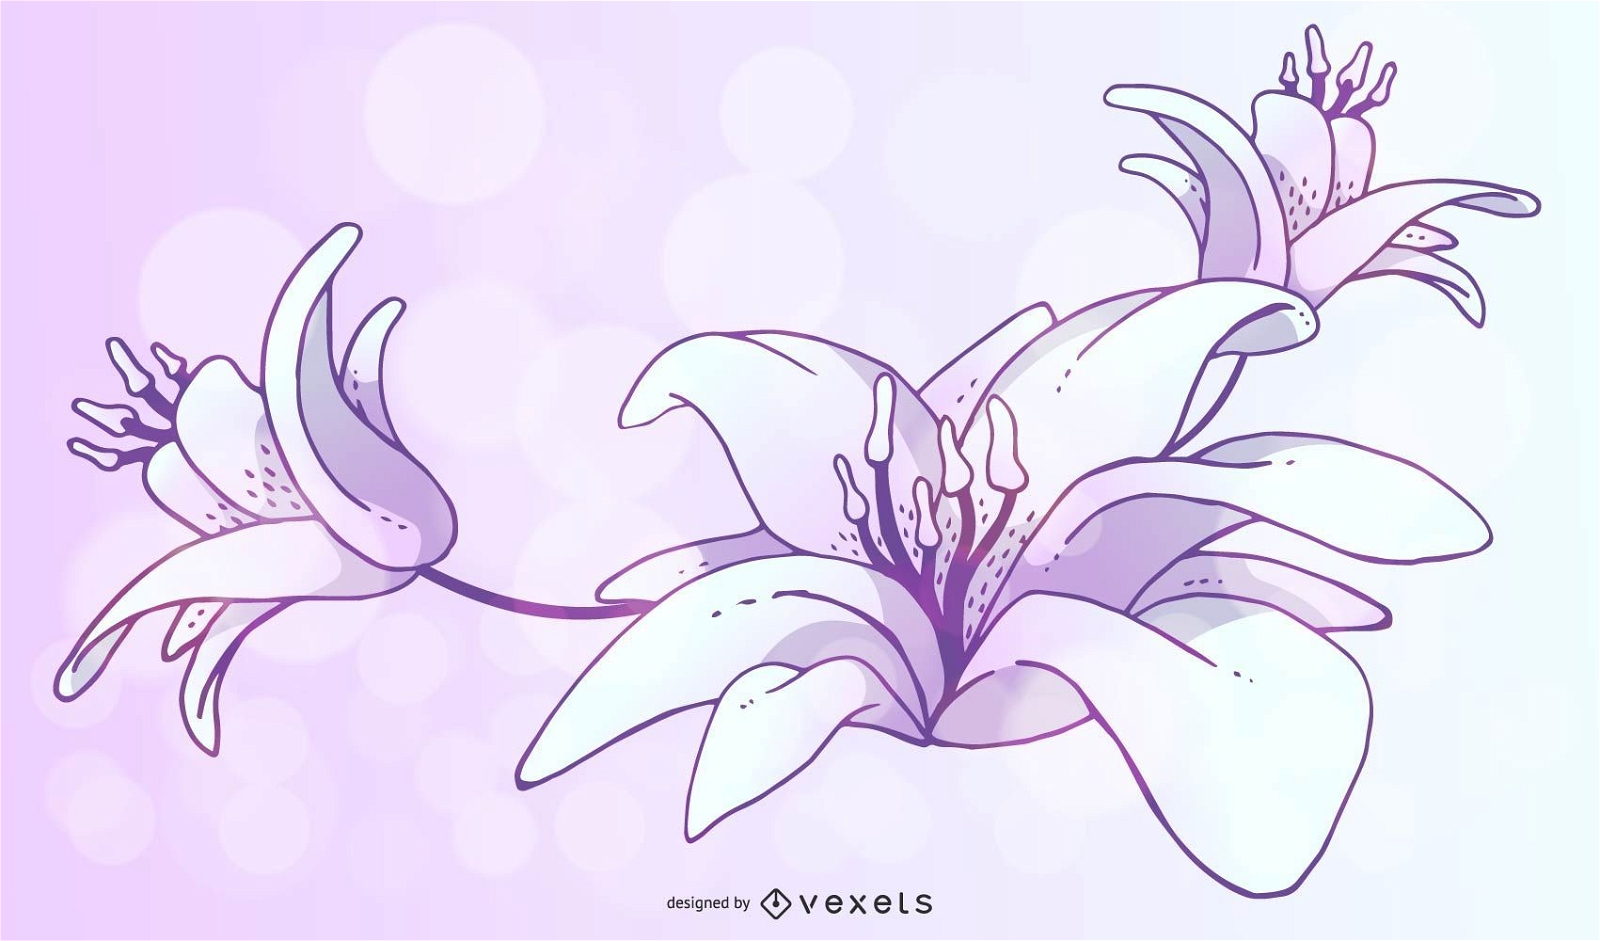 Lily flower shiny illustration design